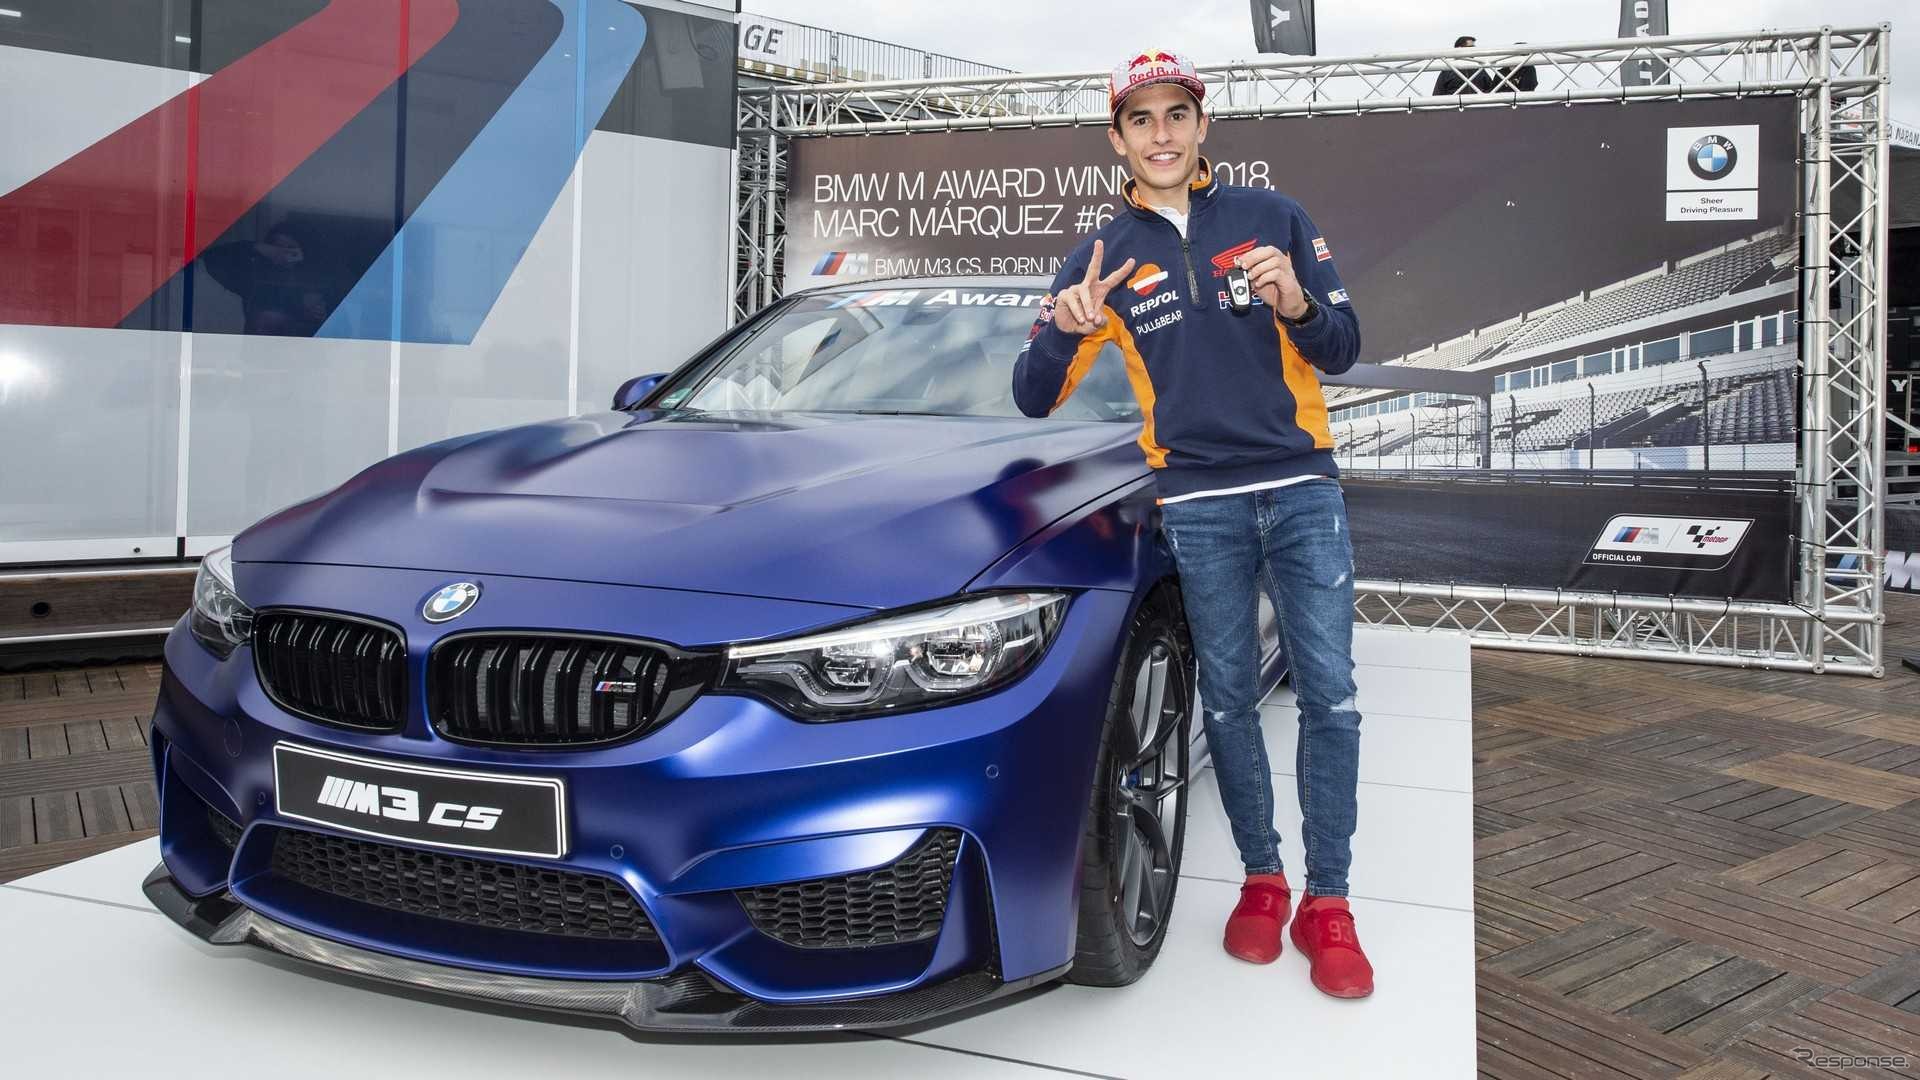 BMWがMotoGPの2018年の年間予選最速者、マルク・マルケス選手にM3 CS贈呈